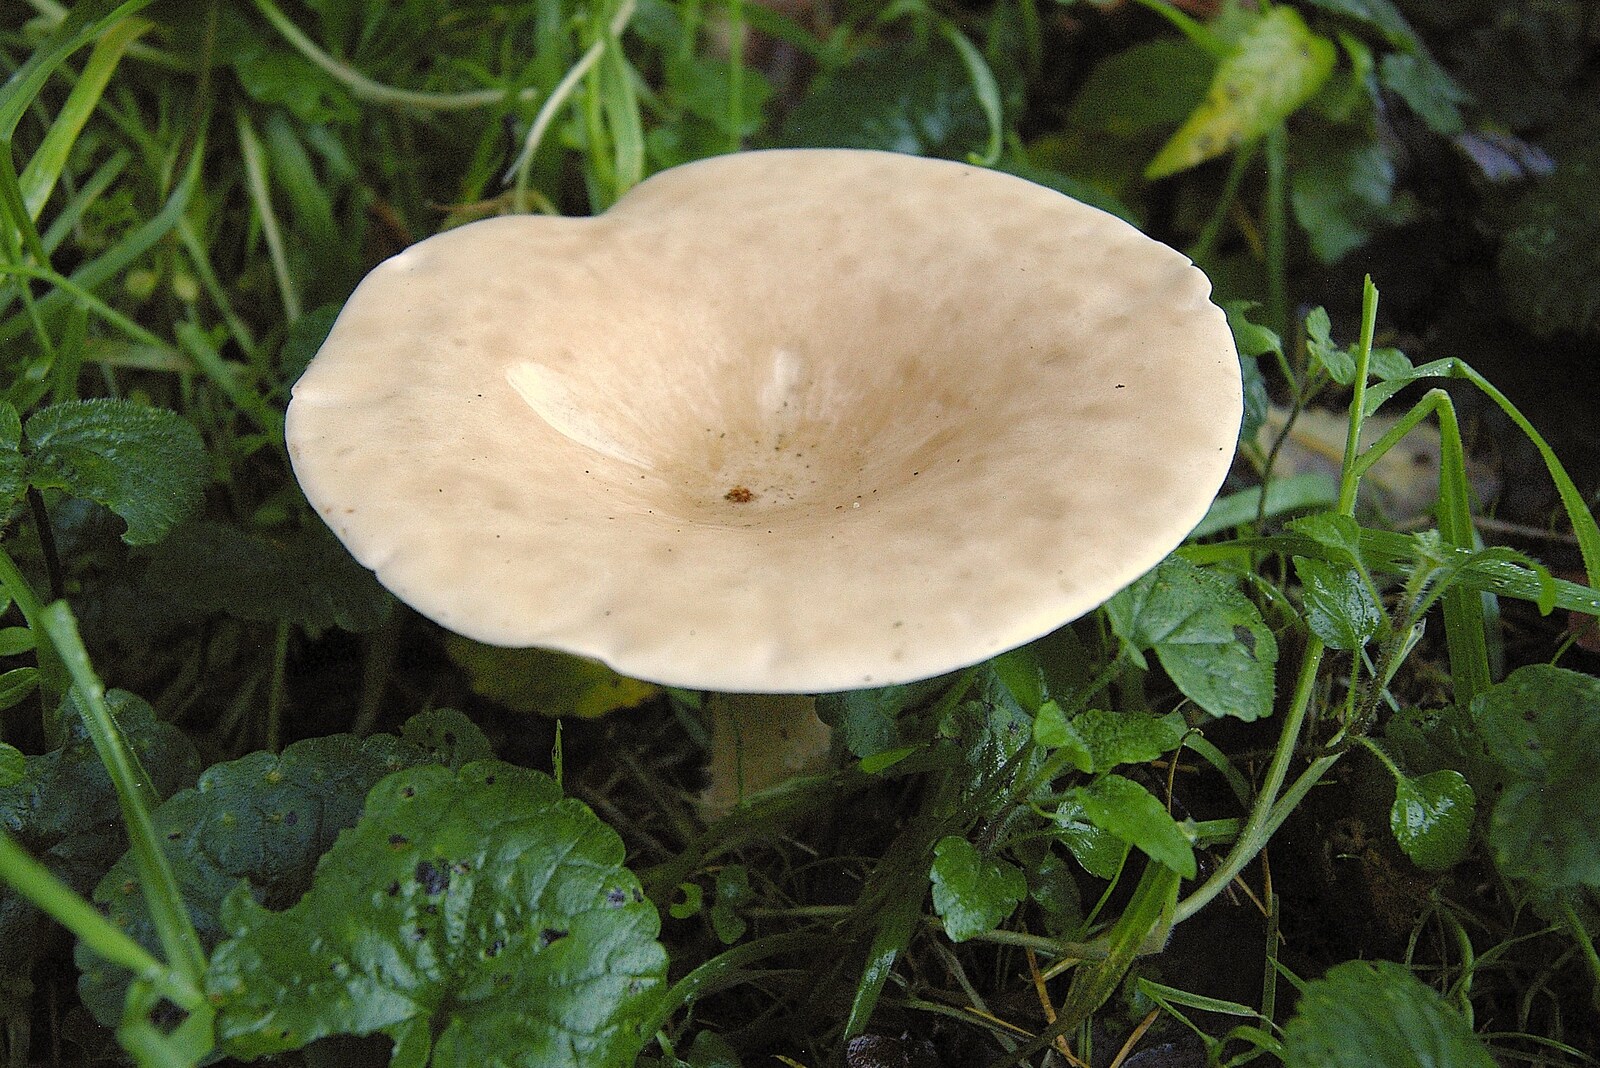 A solitary mushroom